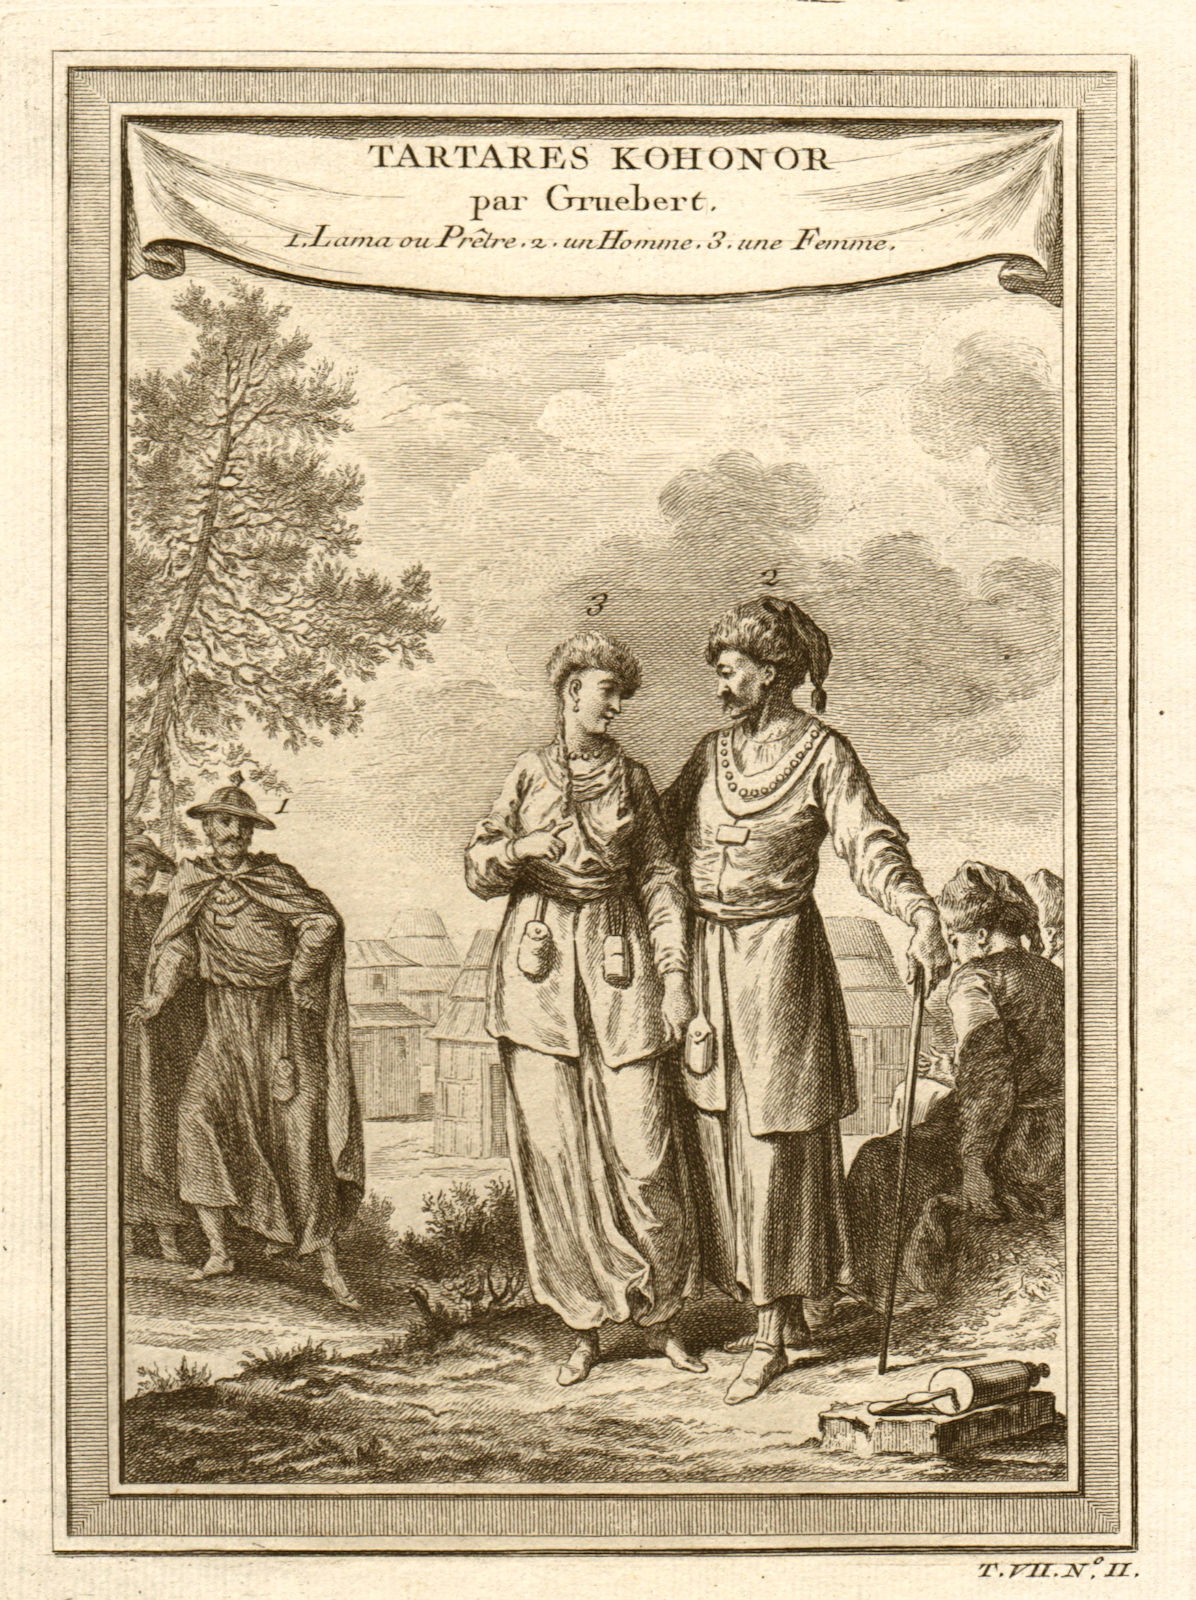 'Tartares Kohonor'. China. Tatars of Kokonor / Qinghai. Lama. Grueber 1749